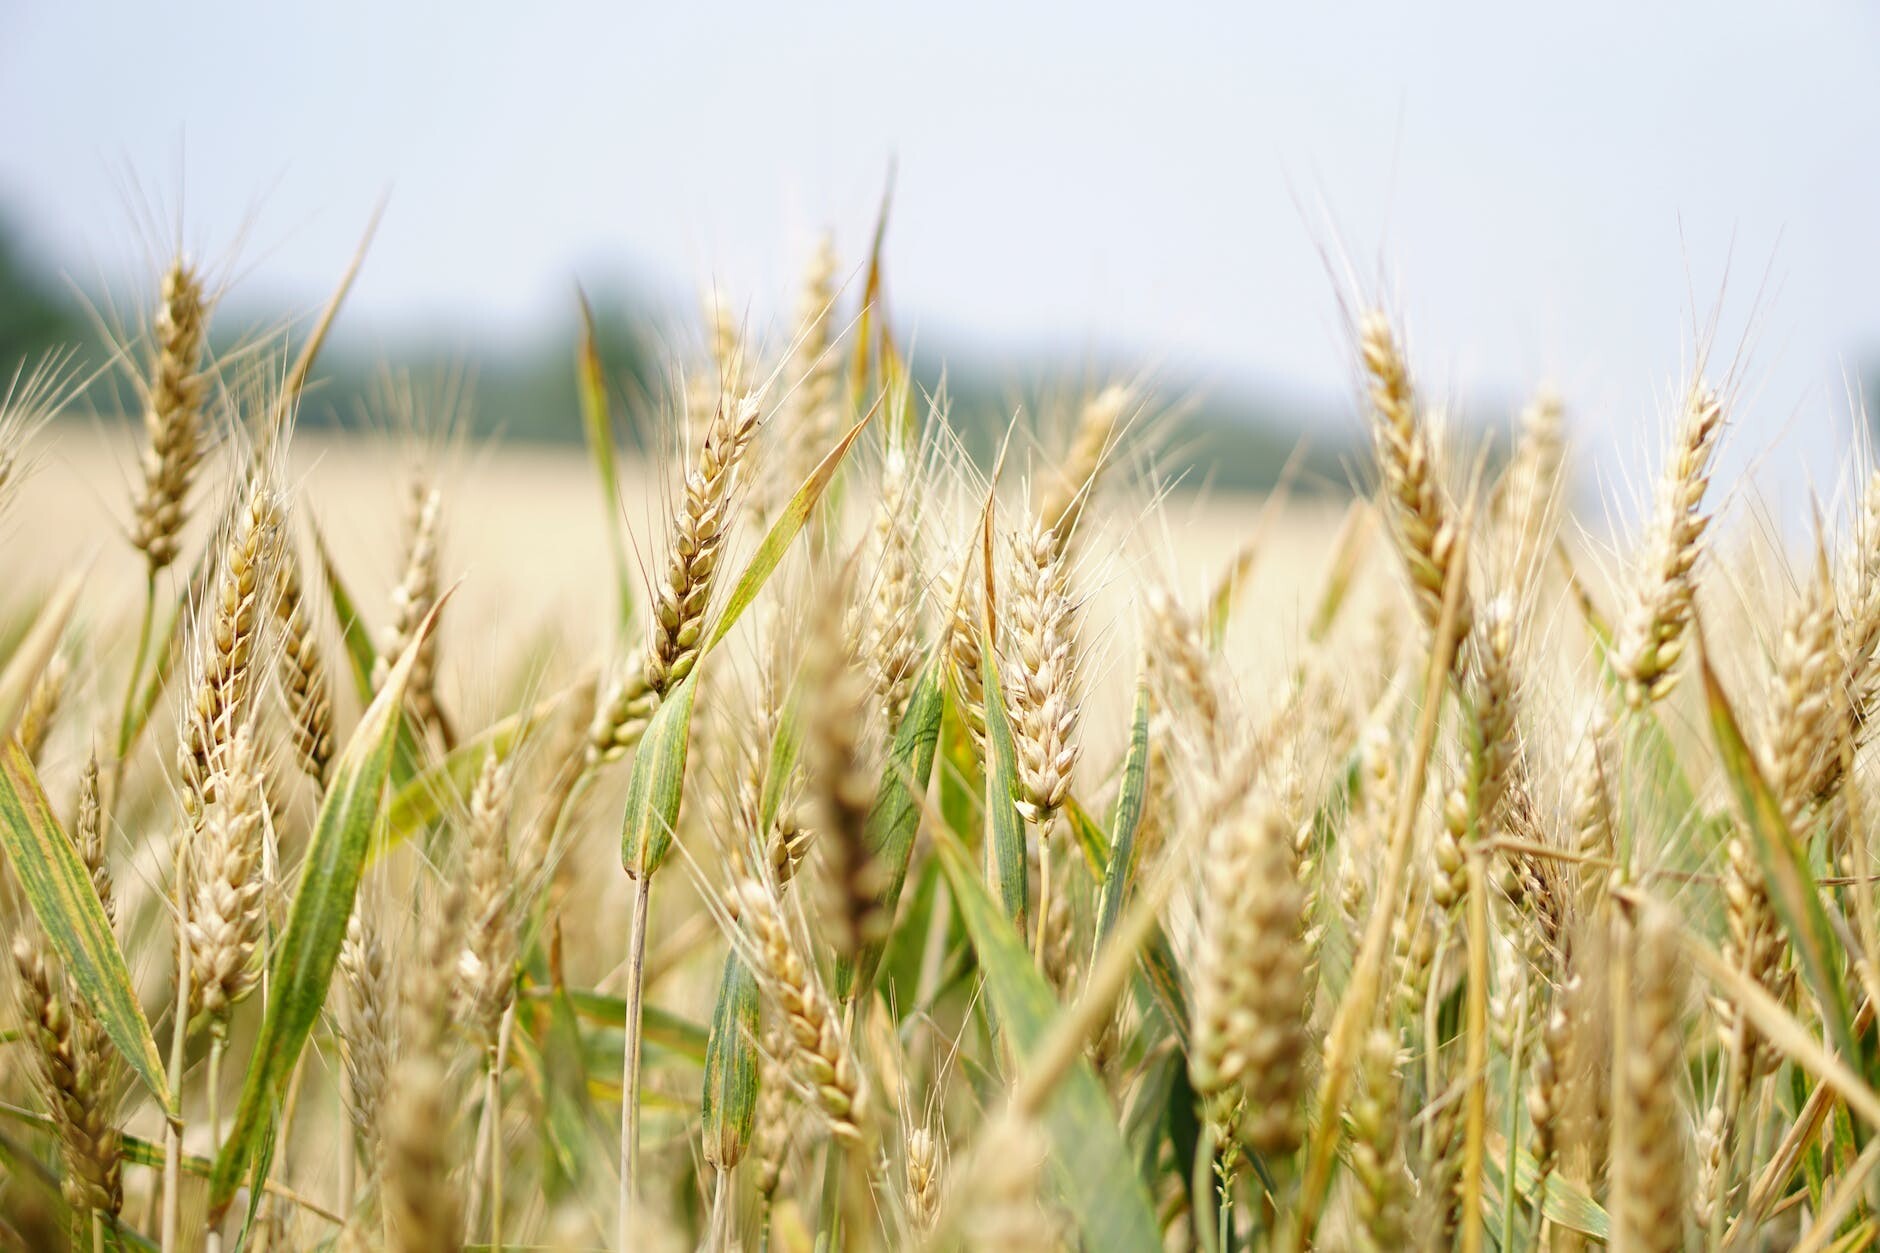 List of Problems Facing Wheat Farming in Kenya